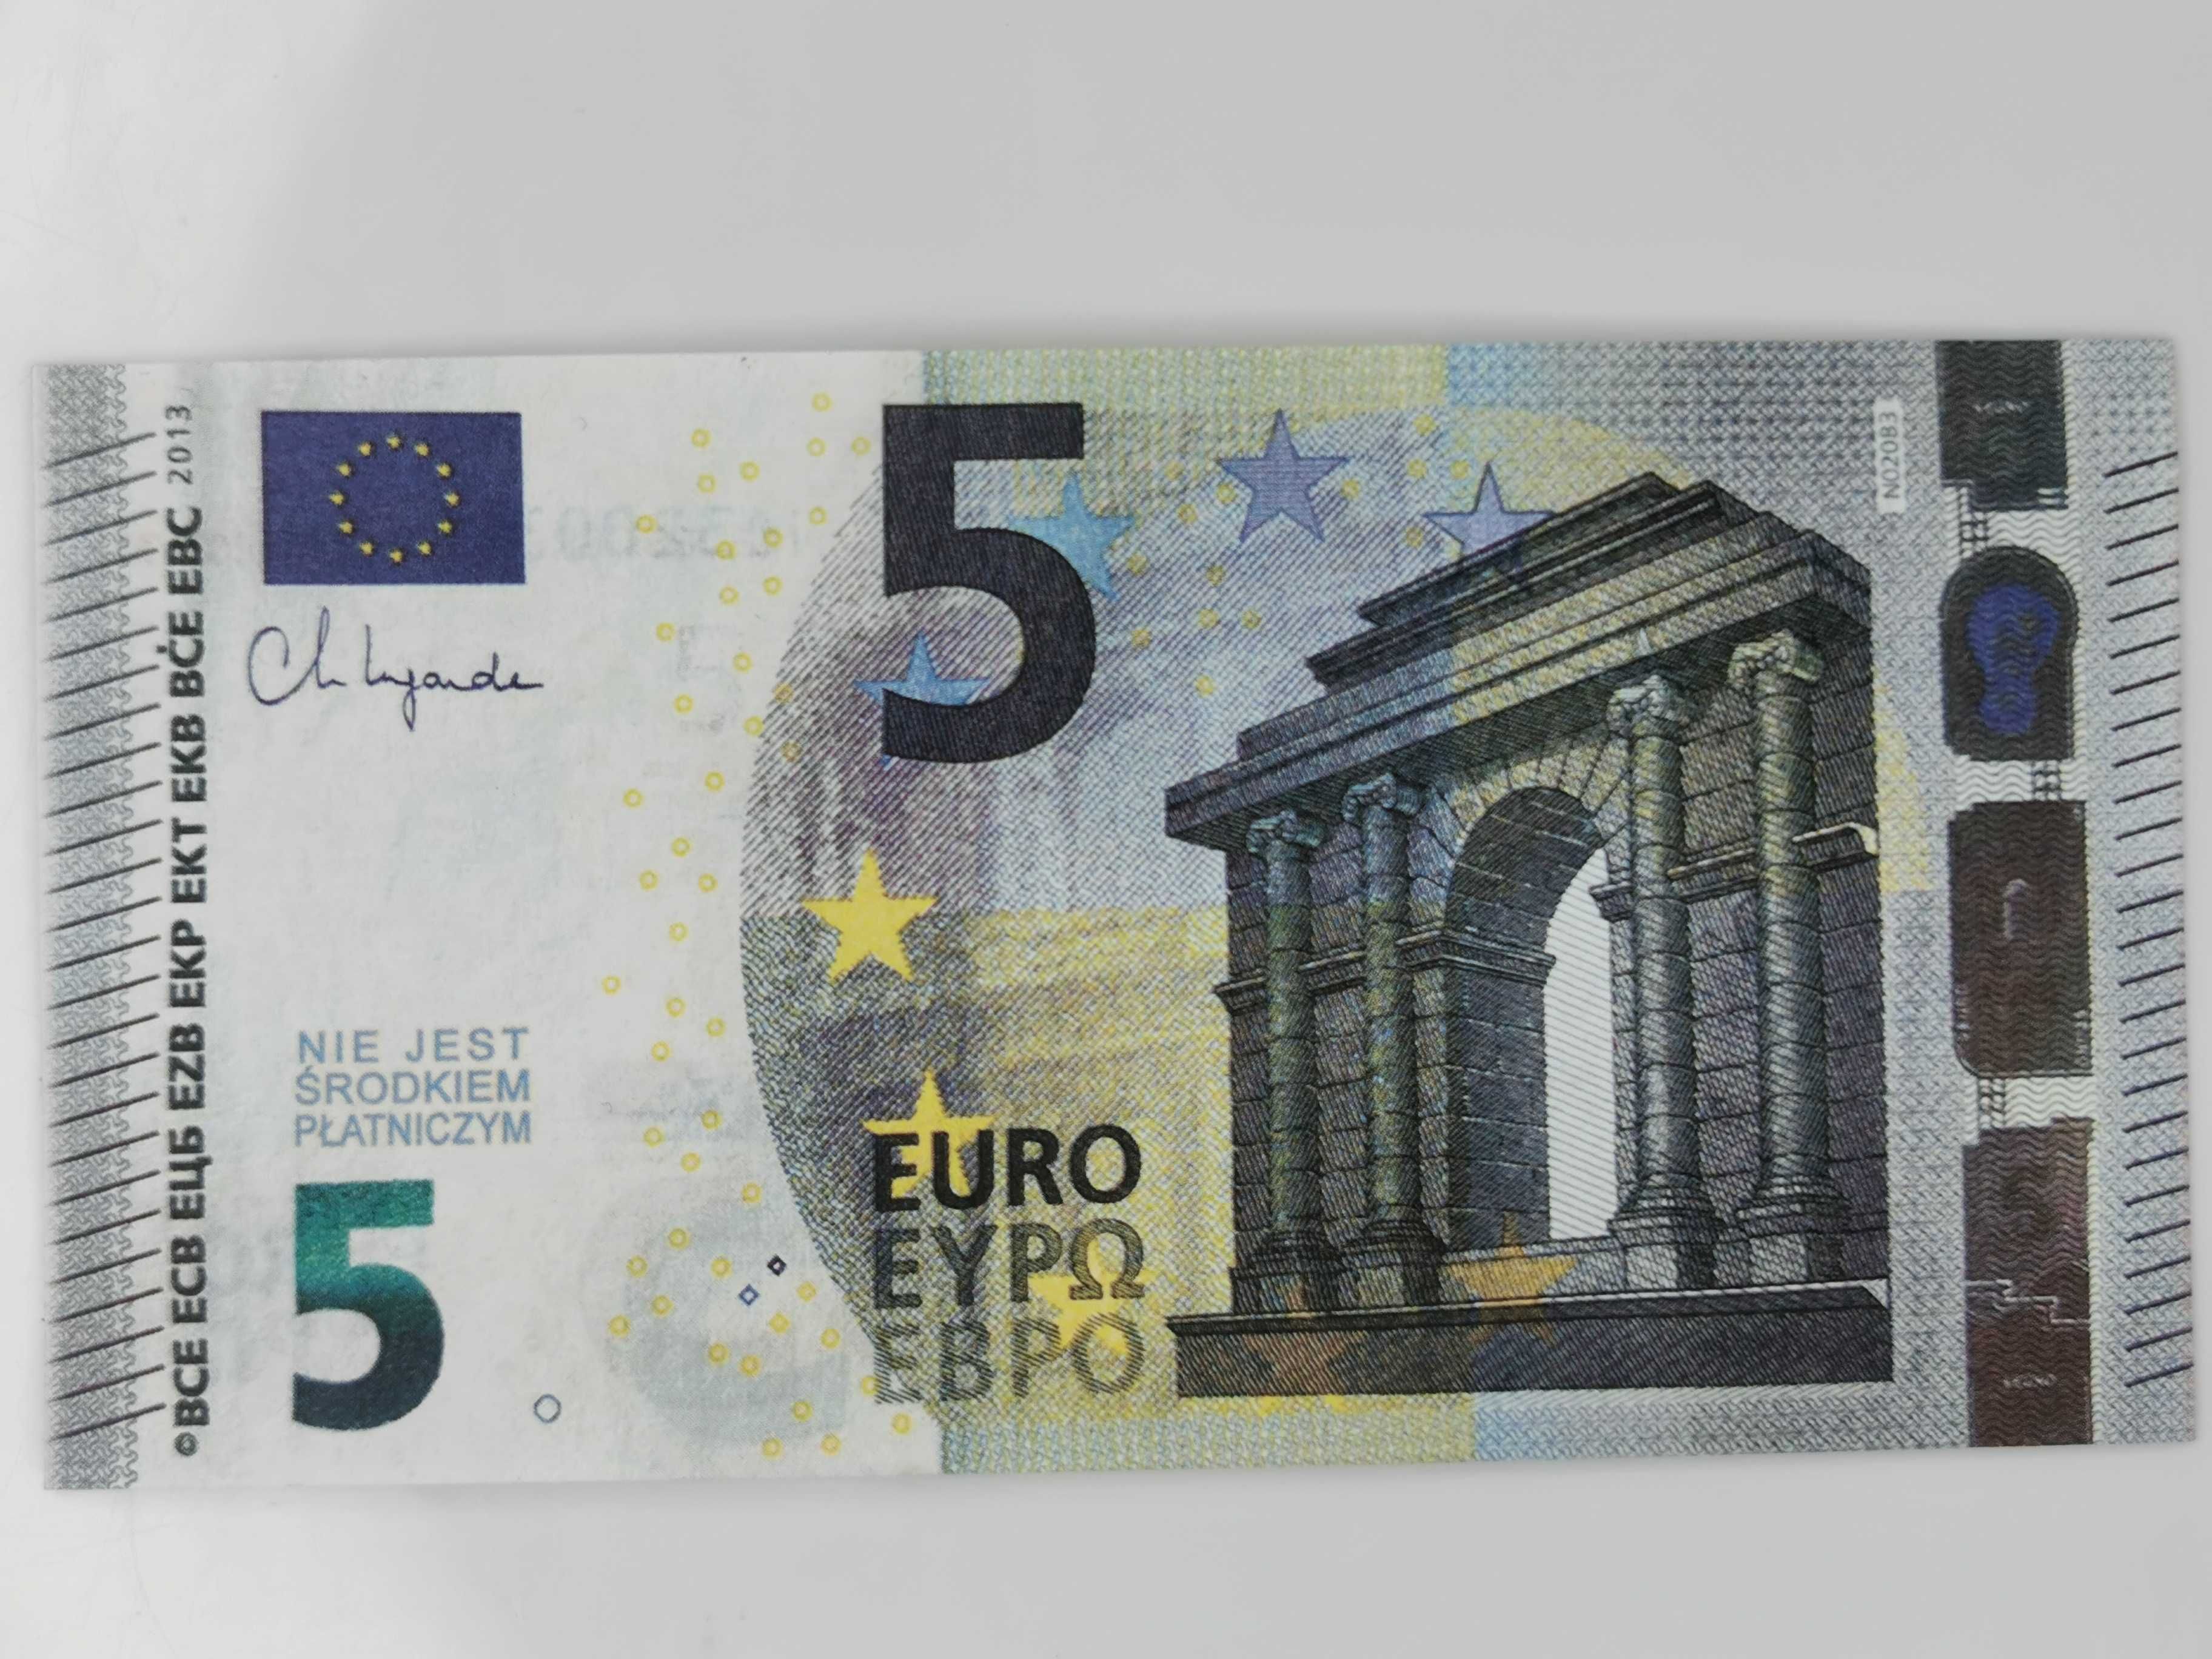 5 EURO plik 100szt. dwustronne edukacja, zabawa, gry, film, teatr